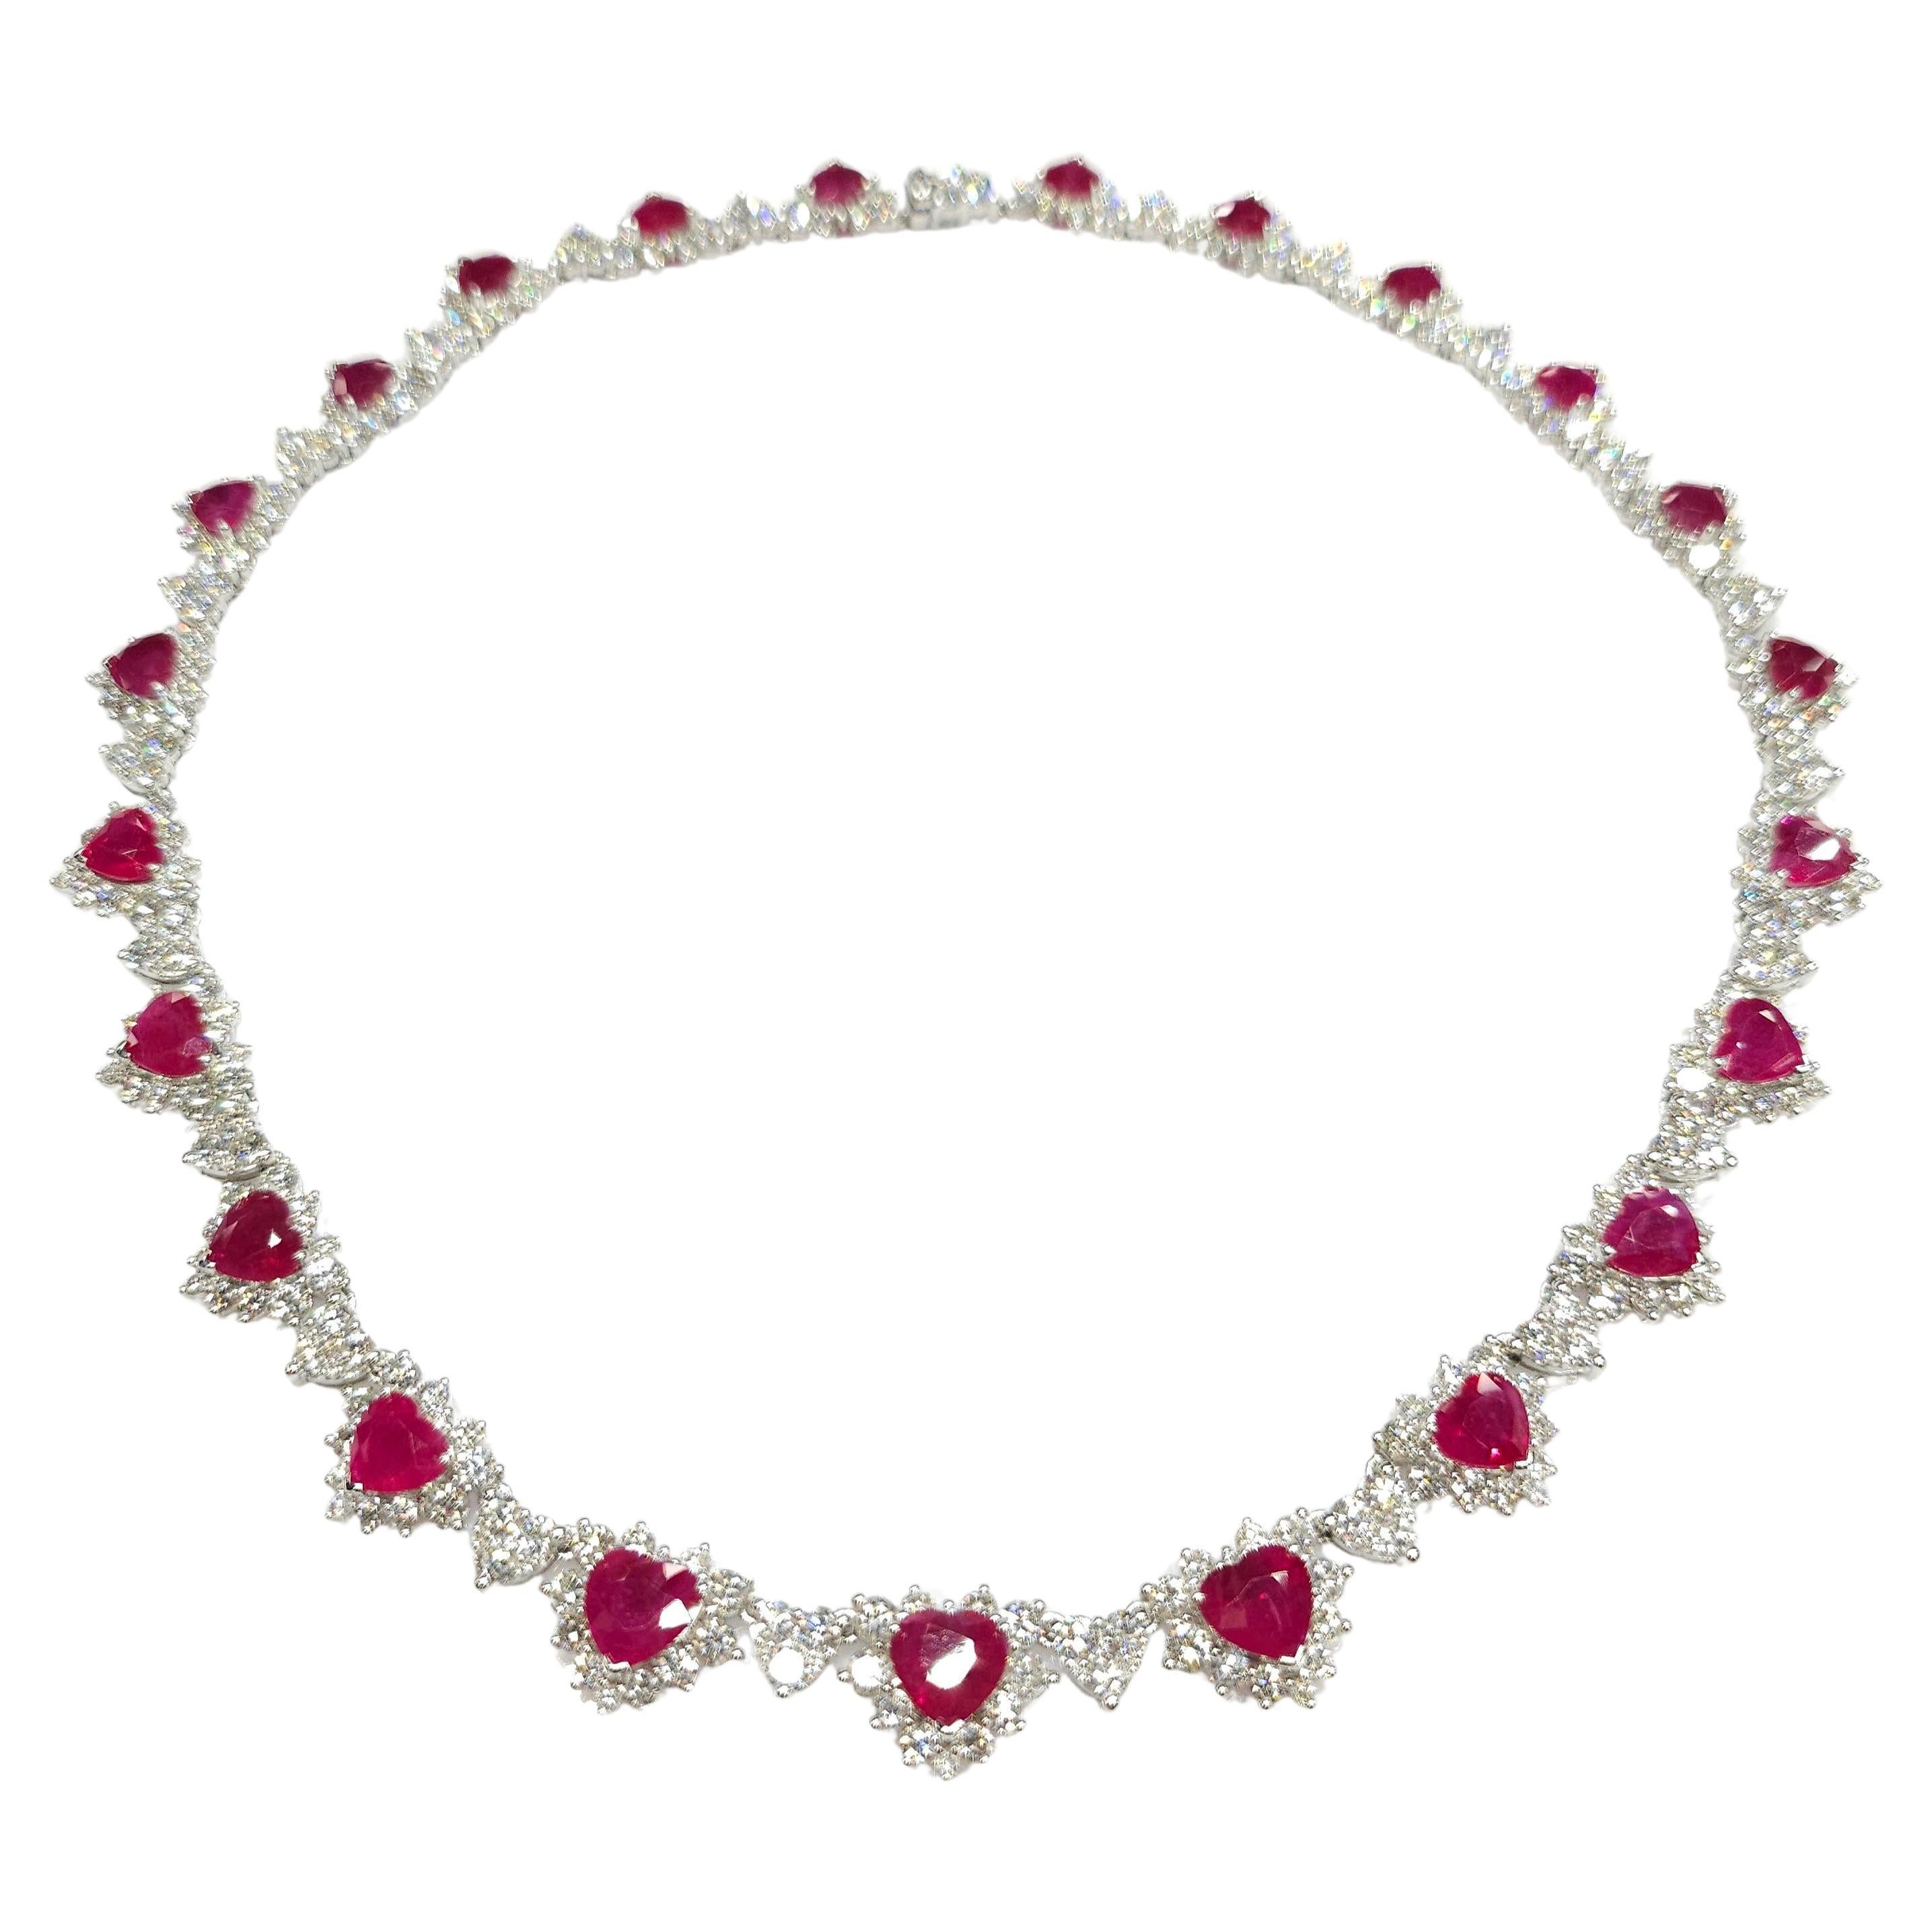 IGI Certified 26.58 Carat Burma Ruby & 18.85 Carat Diamond Necklace in 18K Gold For Sale